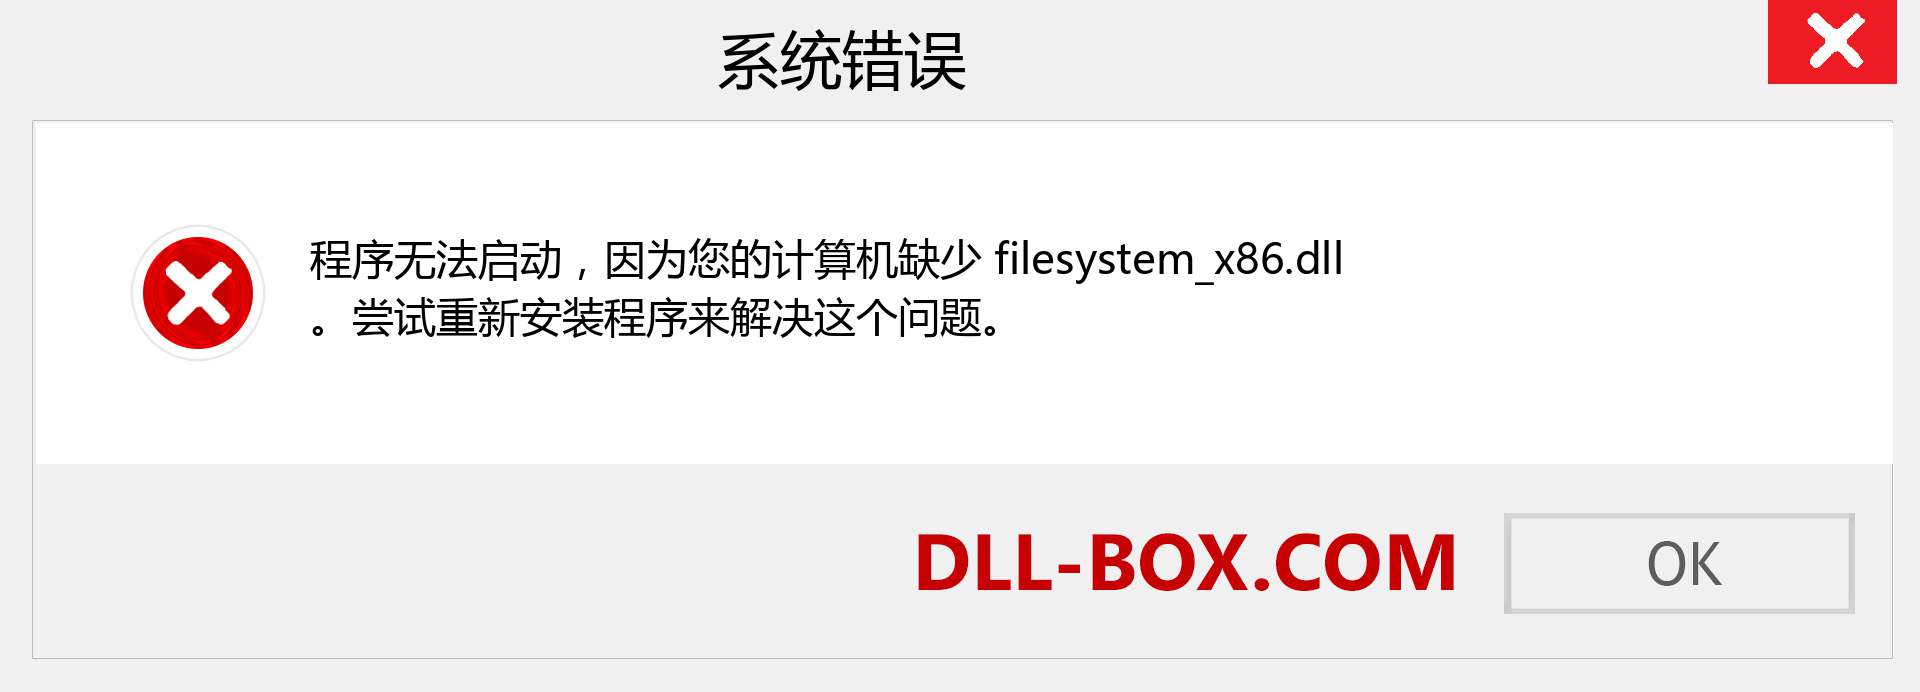 filesystem_x86.dll 文件丢失？。 适用于 Windows 7、8、10 的下载 - 修复 Windows、照片、图像上的 filesystem_x86 dll 丢失错误